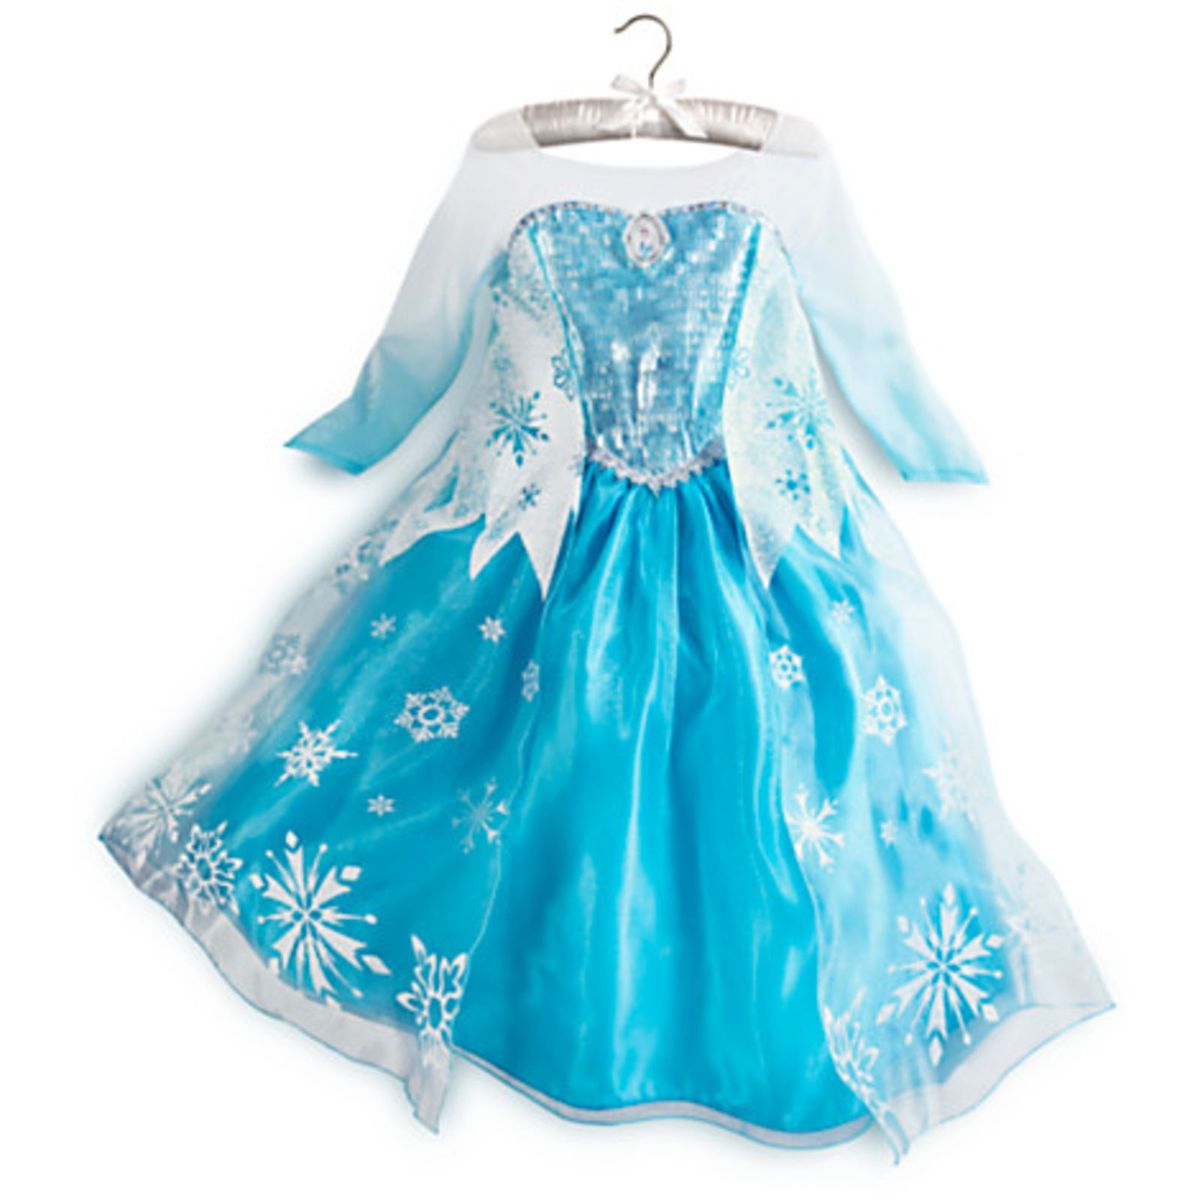 Fantasia Vestido Frozen Elsa Disney 23 Anos Originalíssimo Roupa Infantil Para Menina Disney 1049